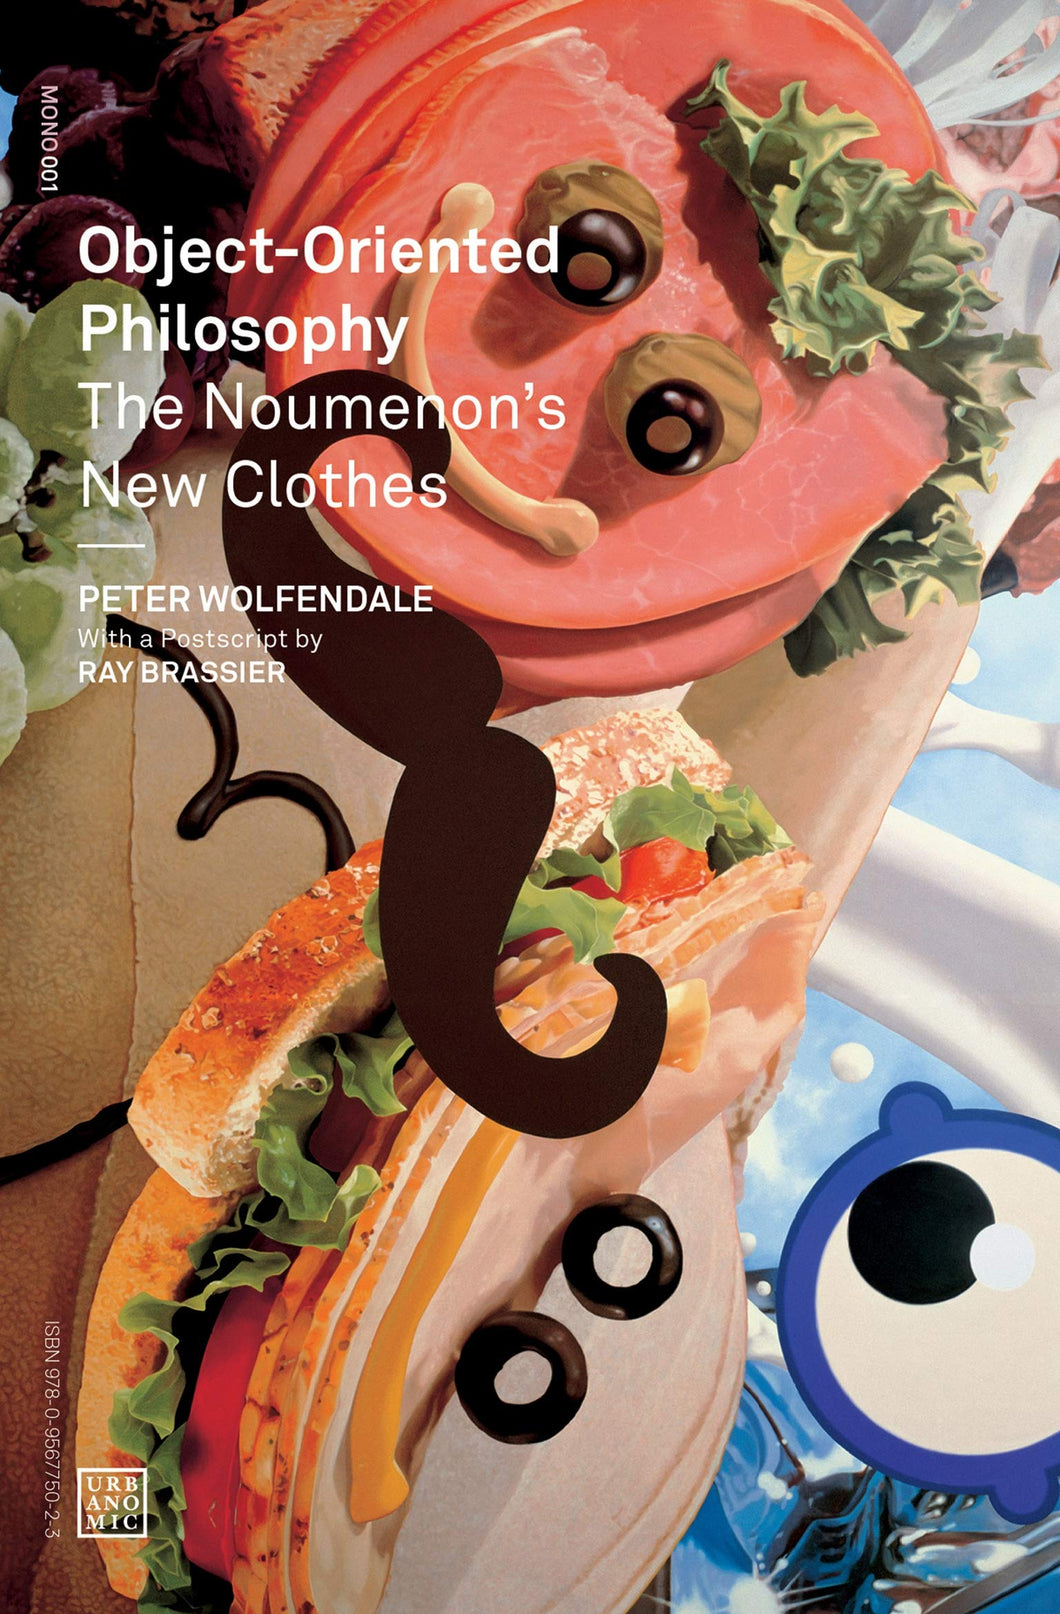 Object-Oriented Philosophy : The Noumenon's New Clothes ร้านหนังสือและสิ่งของ เป็นร้านหนังสือภาษาอังกฤษหายาก และร้านกาแฟ หรือ บุ๊คคาเฟ่ ตั้งอยู่สุขุมวิท กรุงเทพ